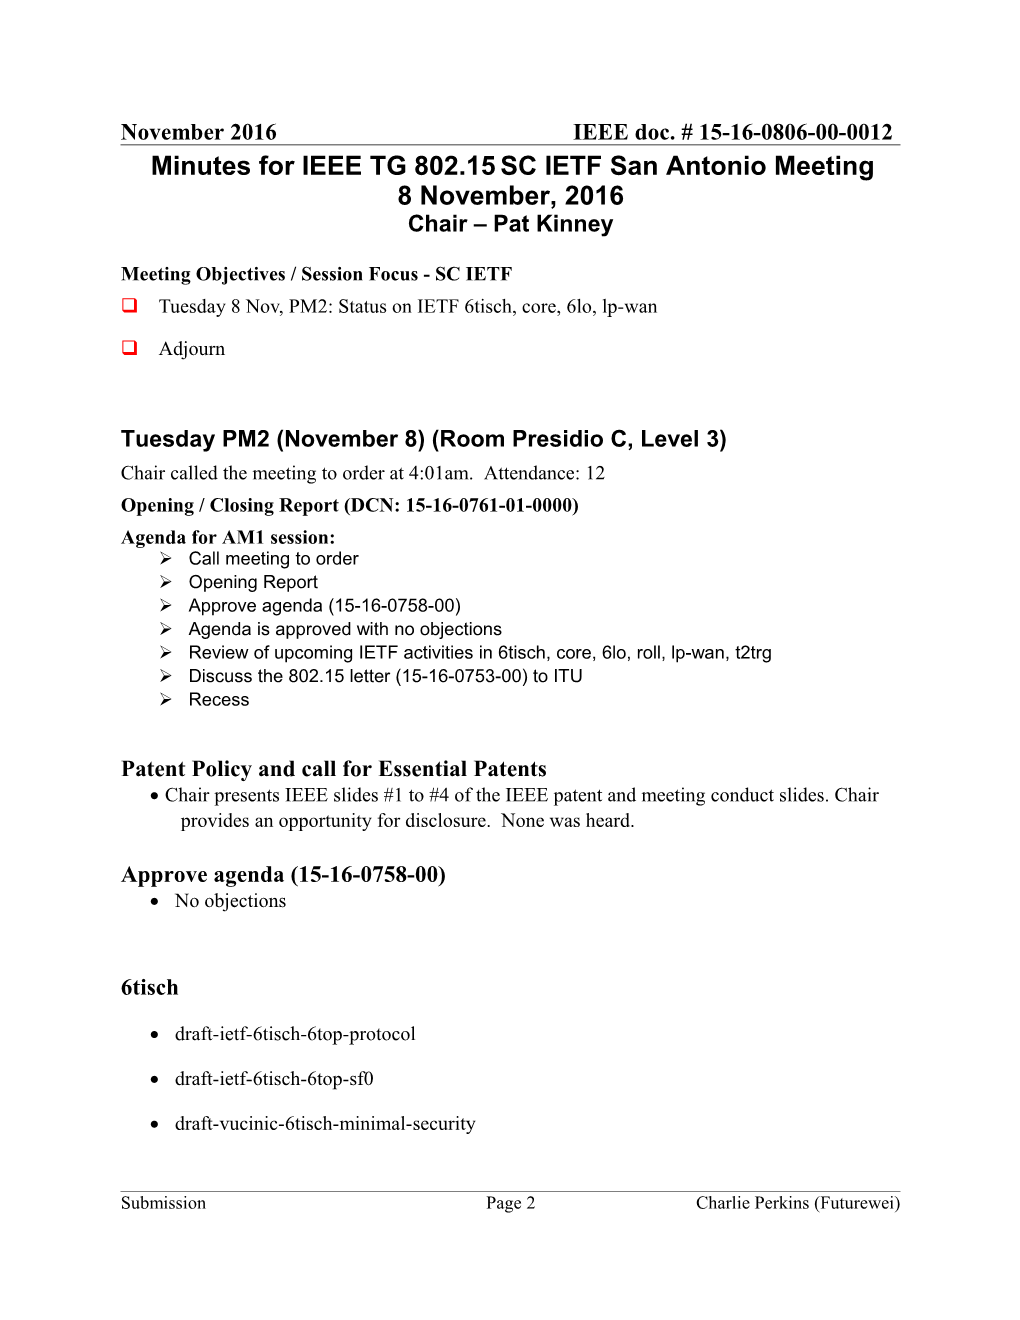 Minutes for IEEE TG 802.15SC IETF San Antonio Meeting